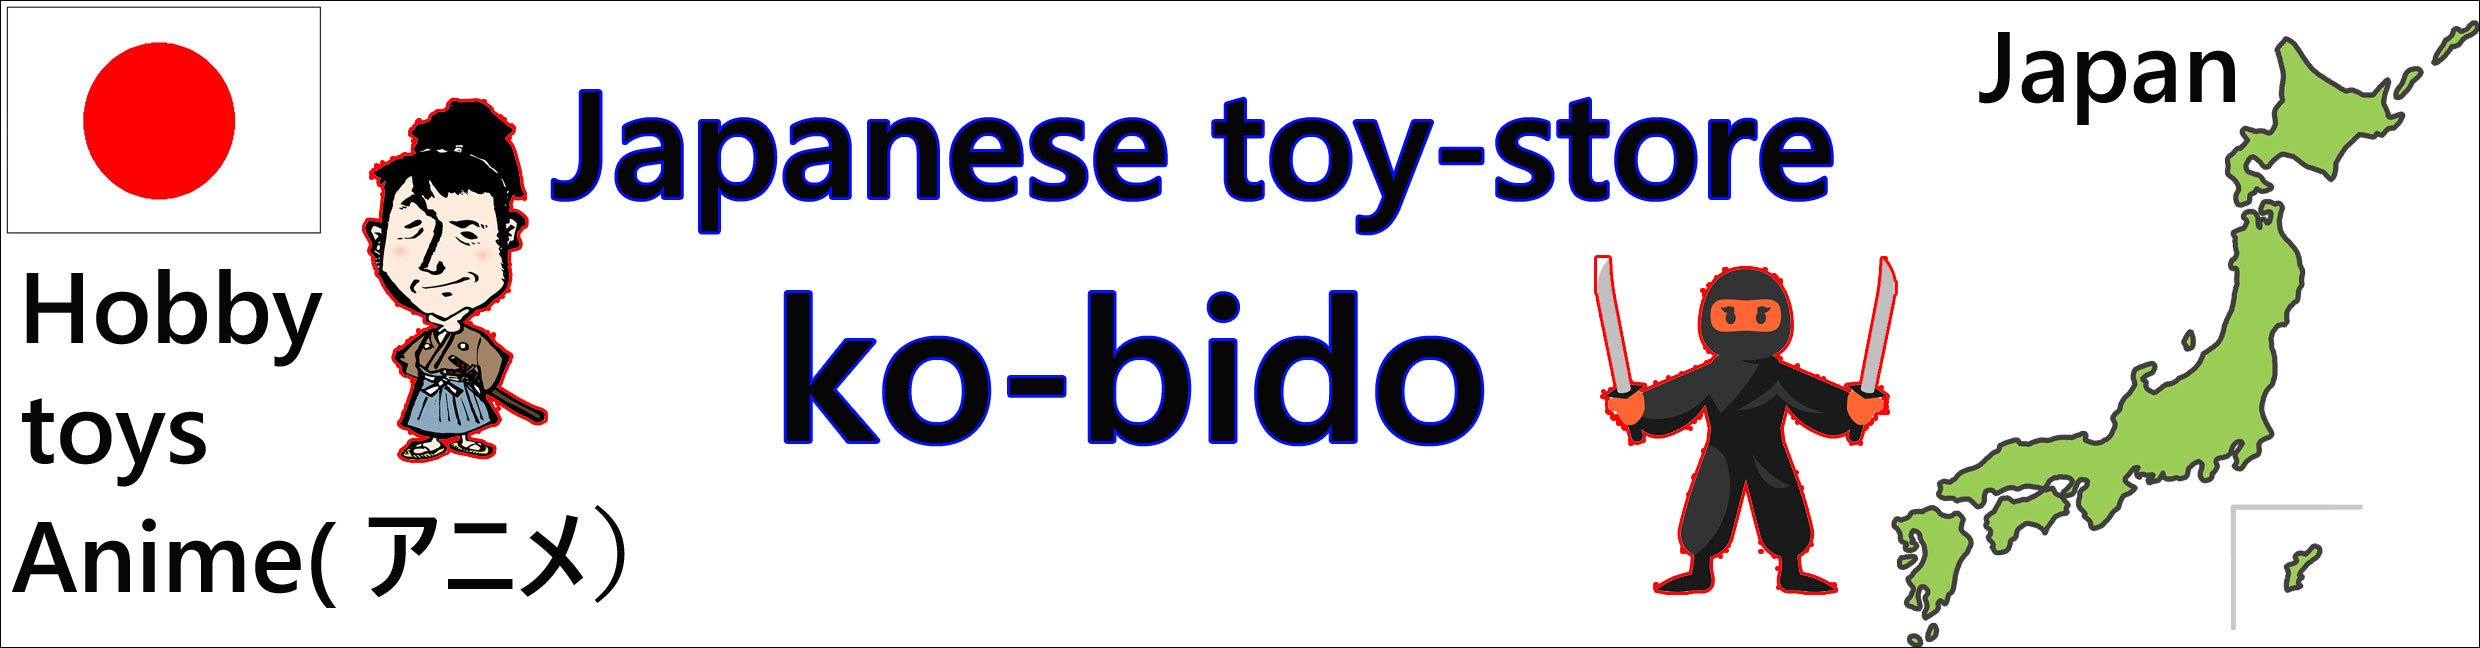 Japanese toystore kobido